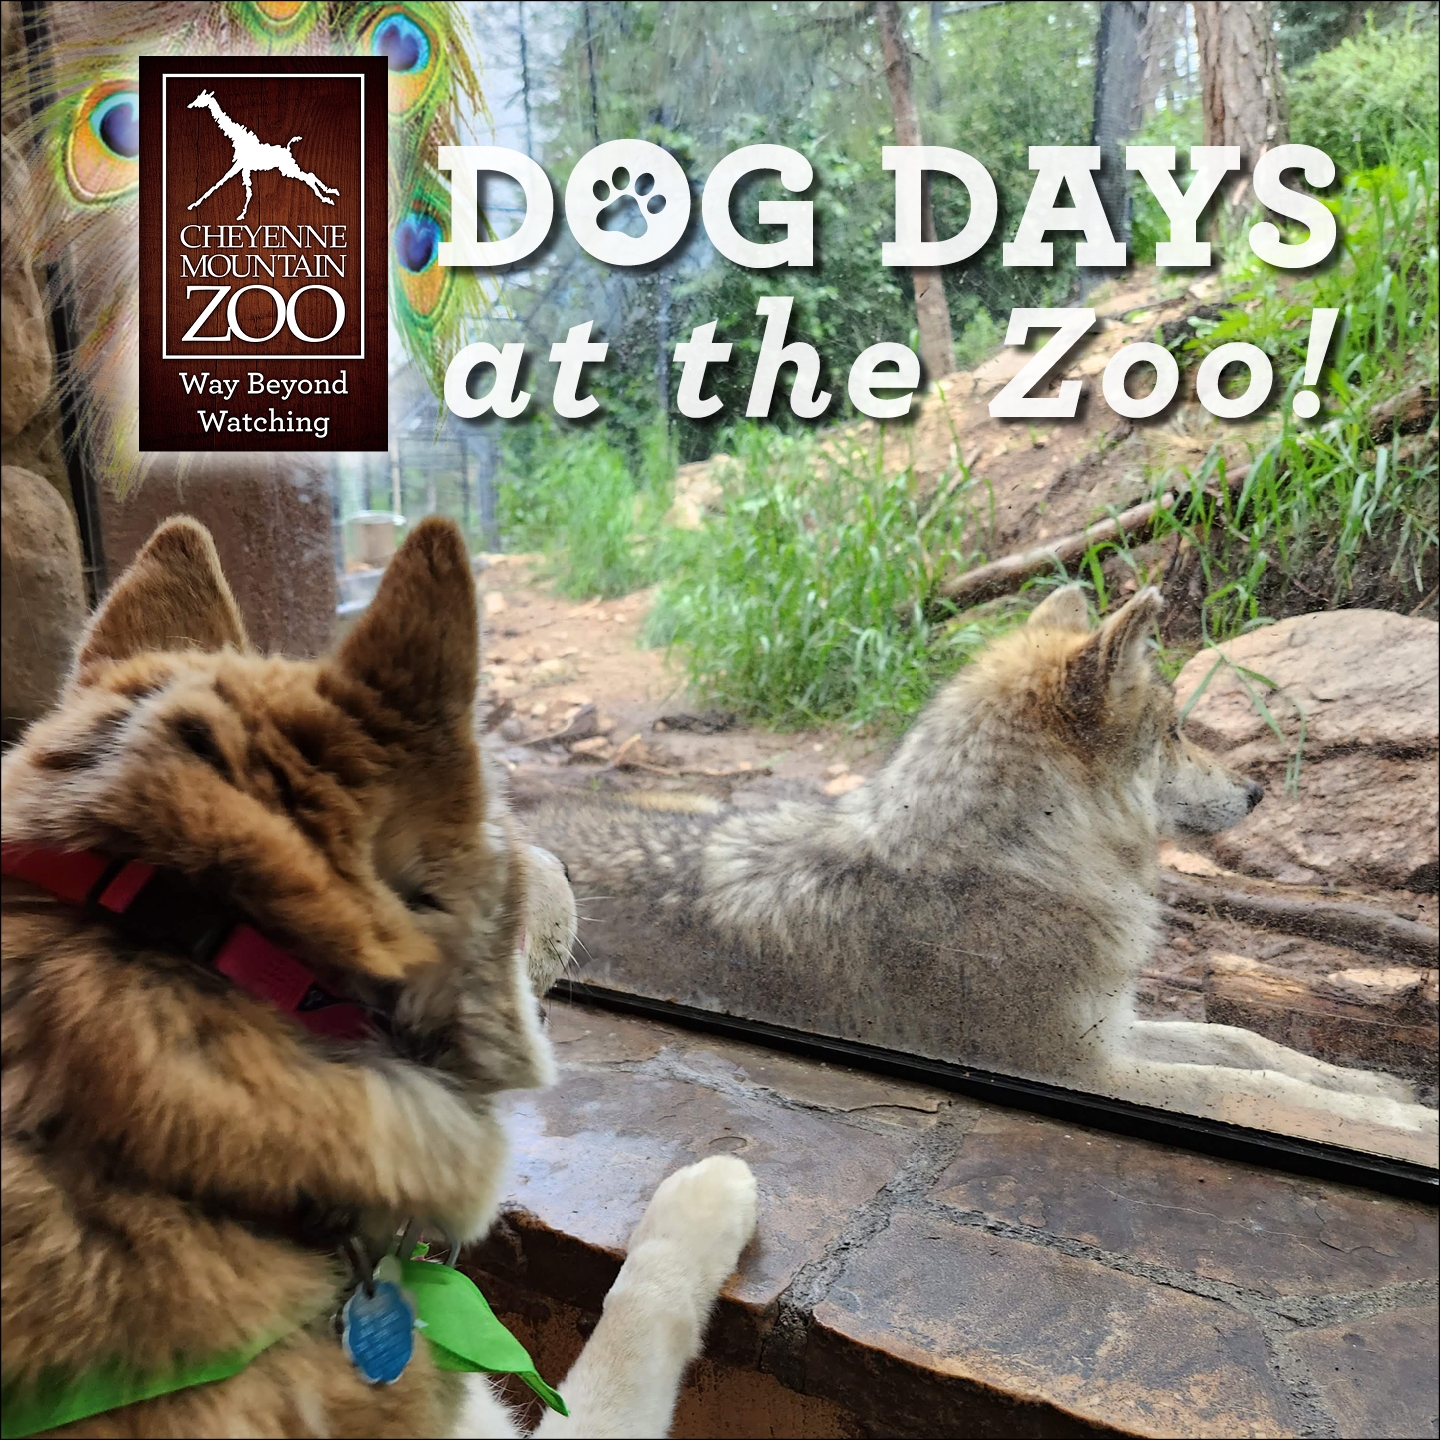 Dog Days at Cheyenne Mountain Zoo